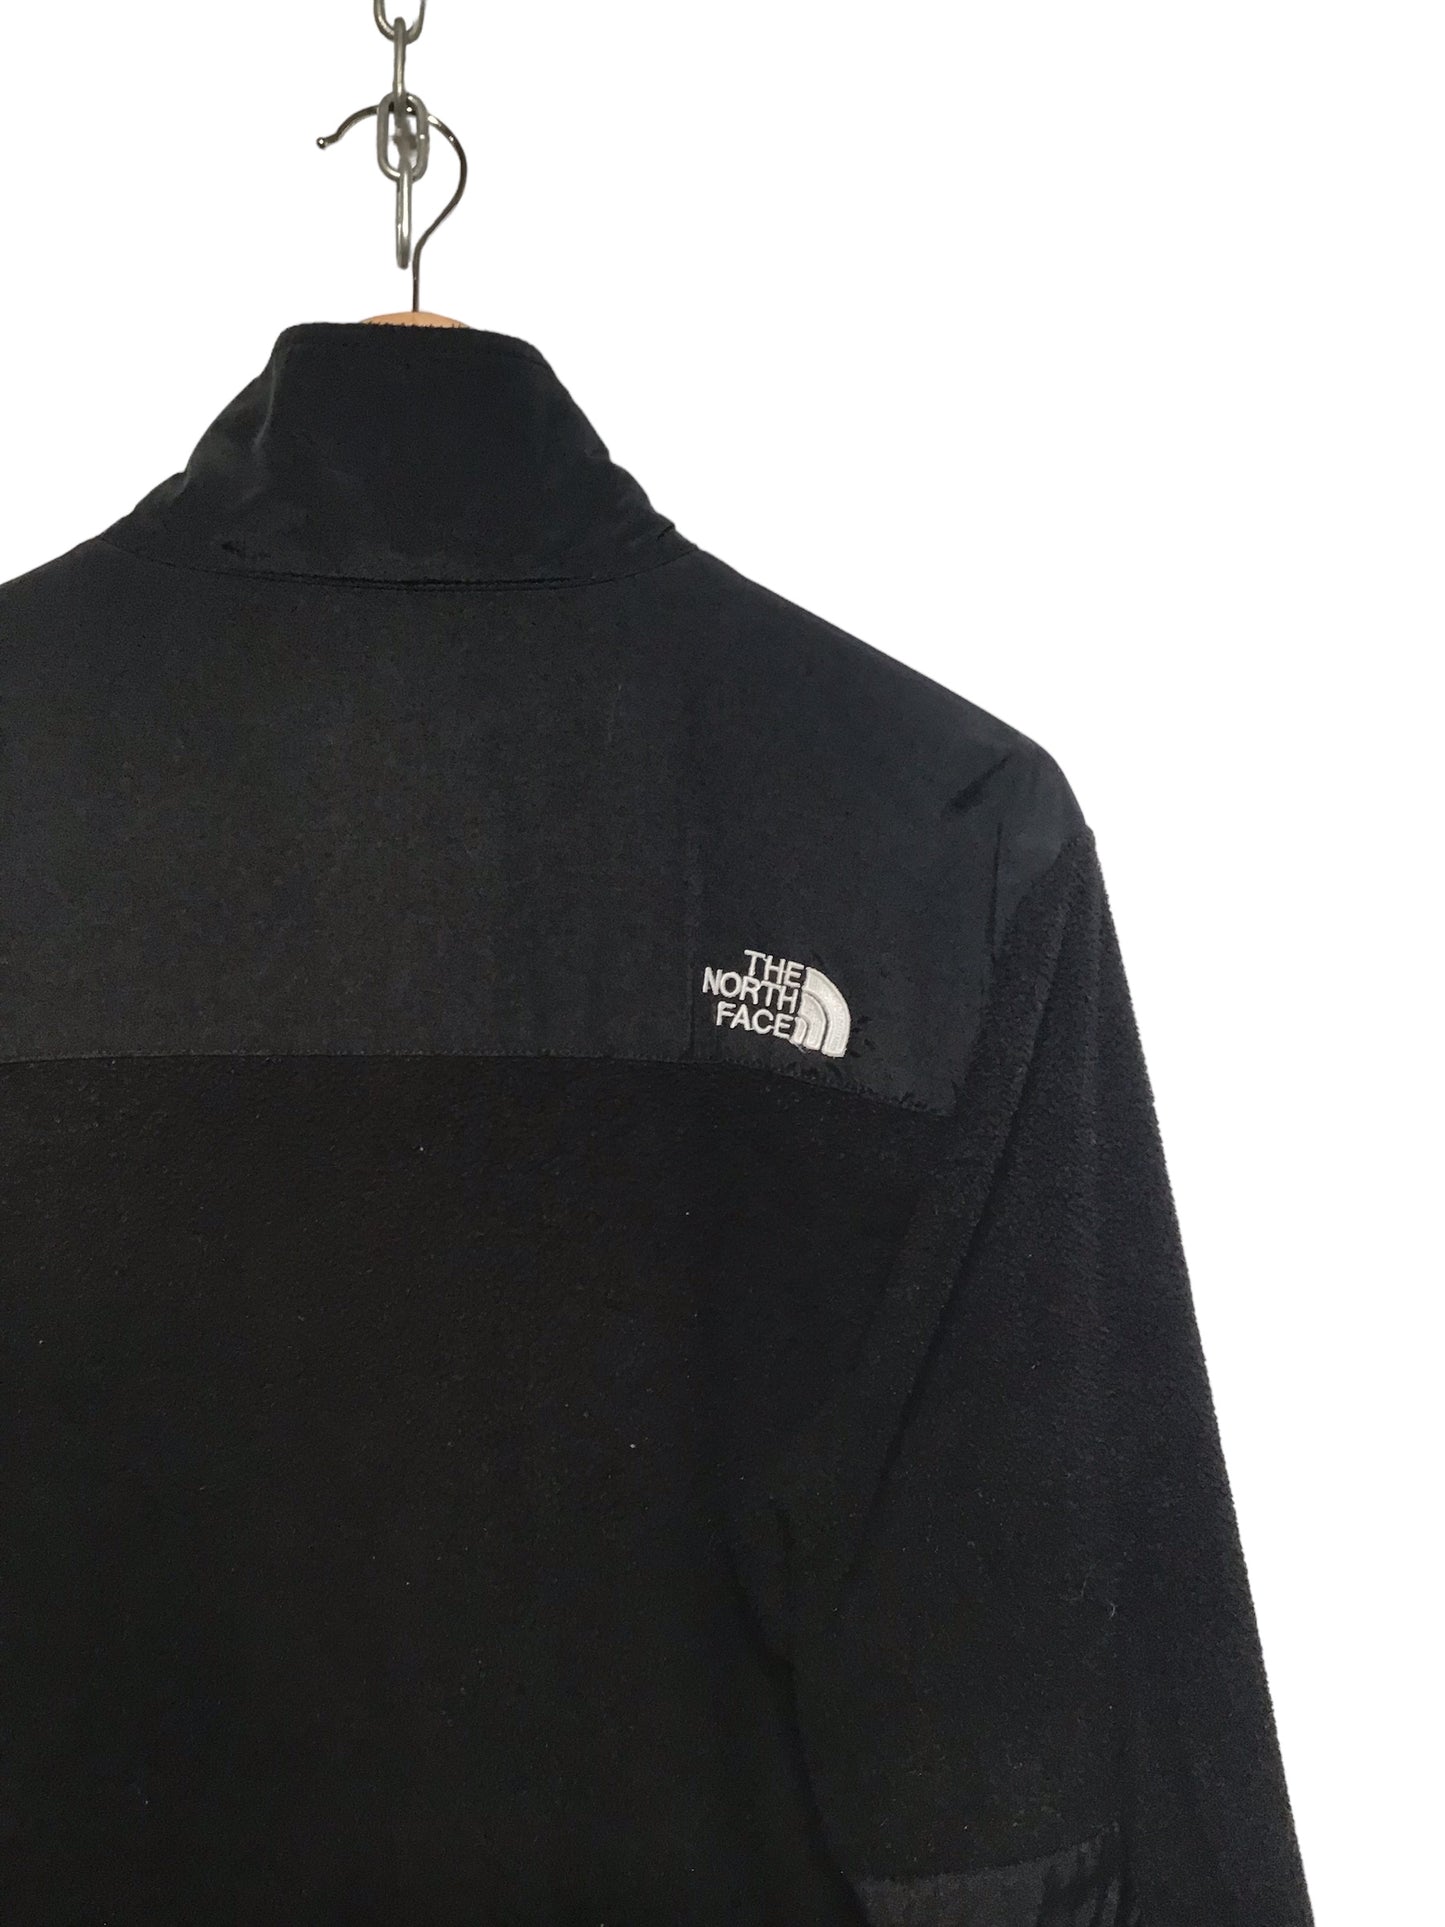 The North Face Black Denali Jacket (Women’s Size XL)